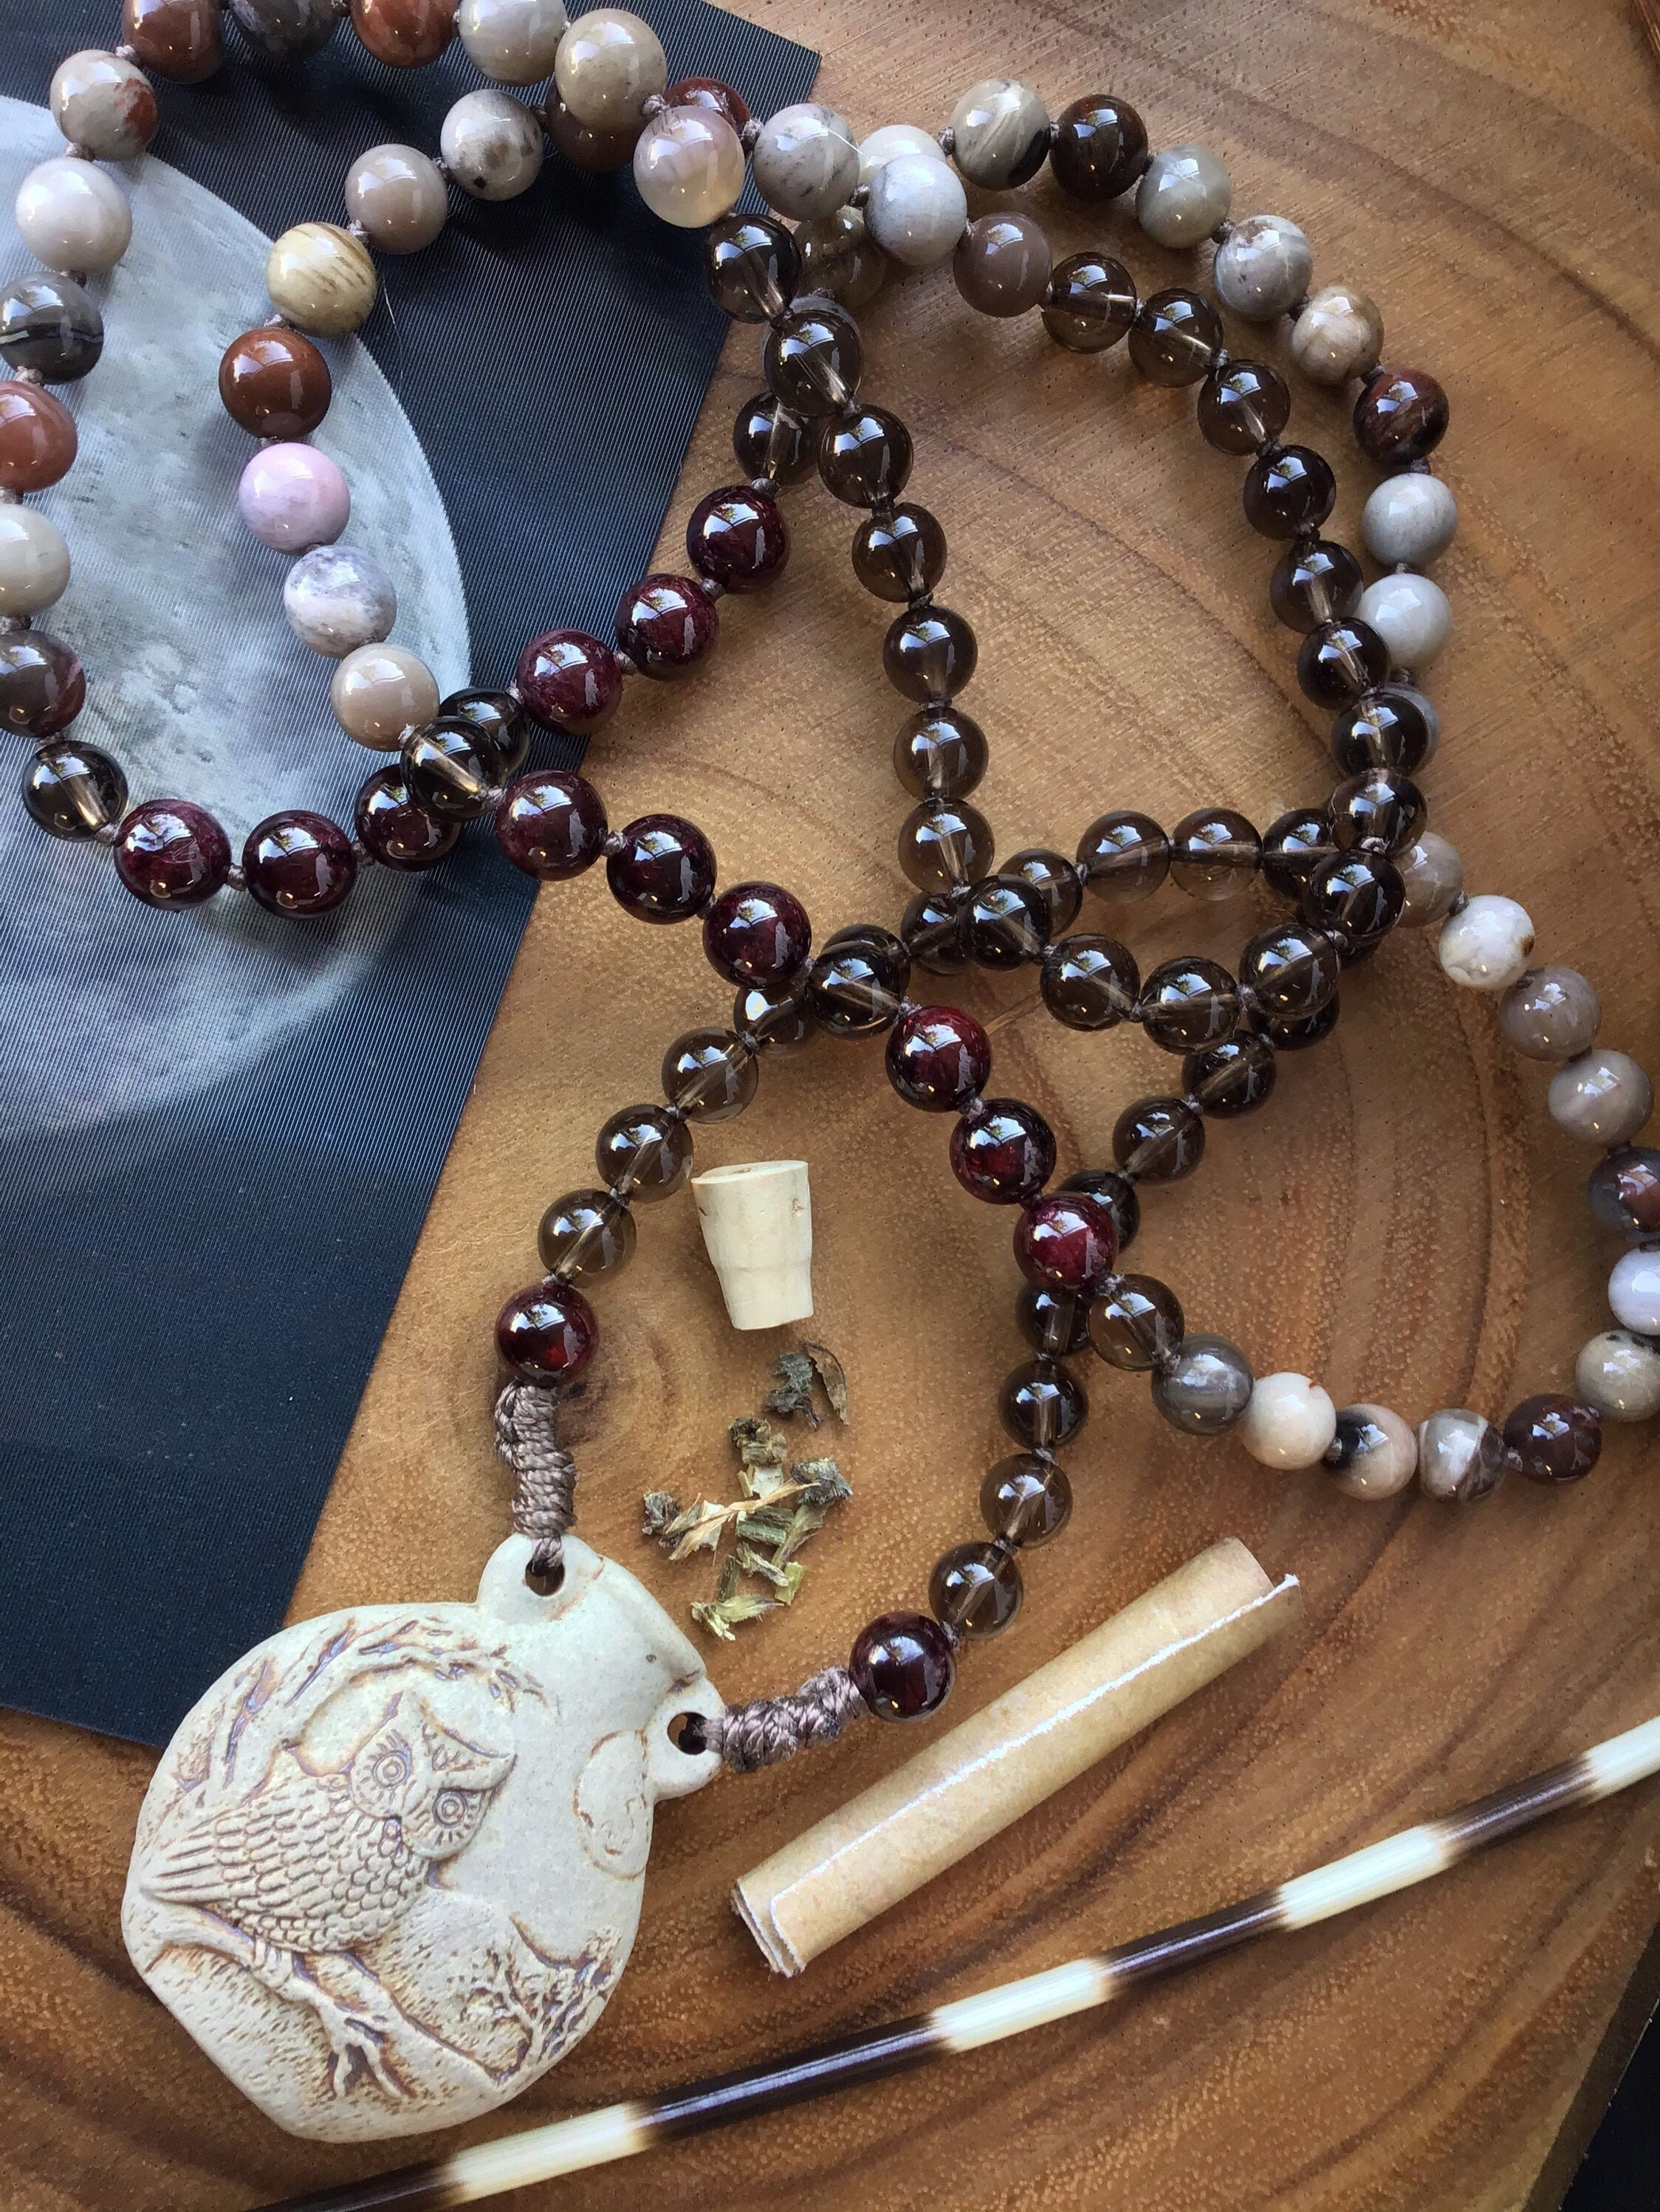 Smoky Quartz and Wood Beads Necklace